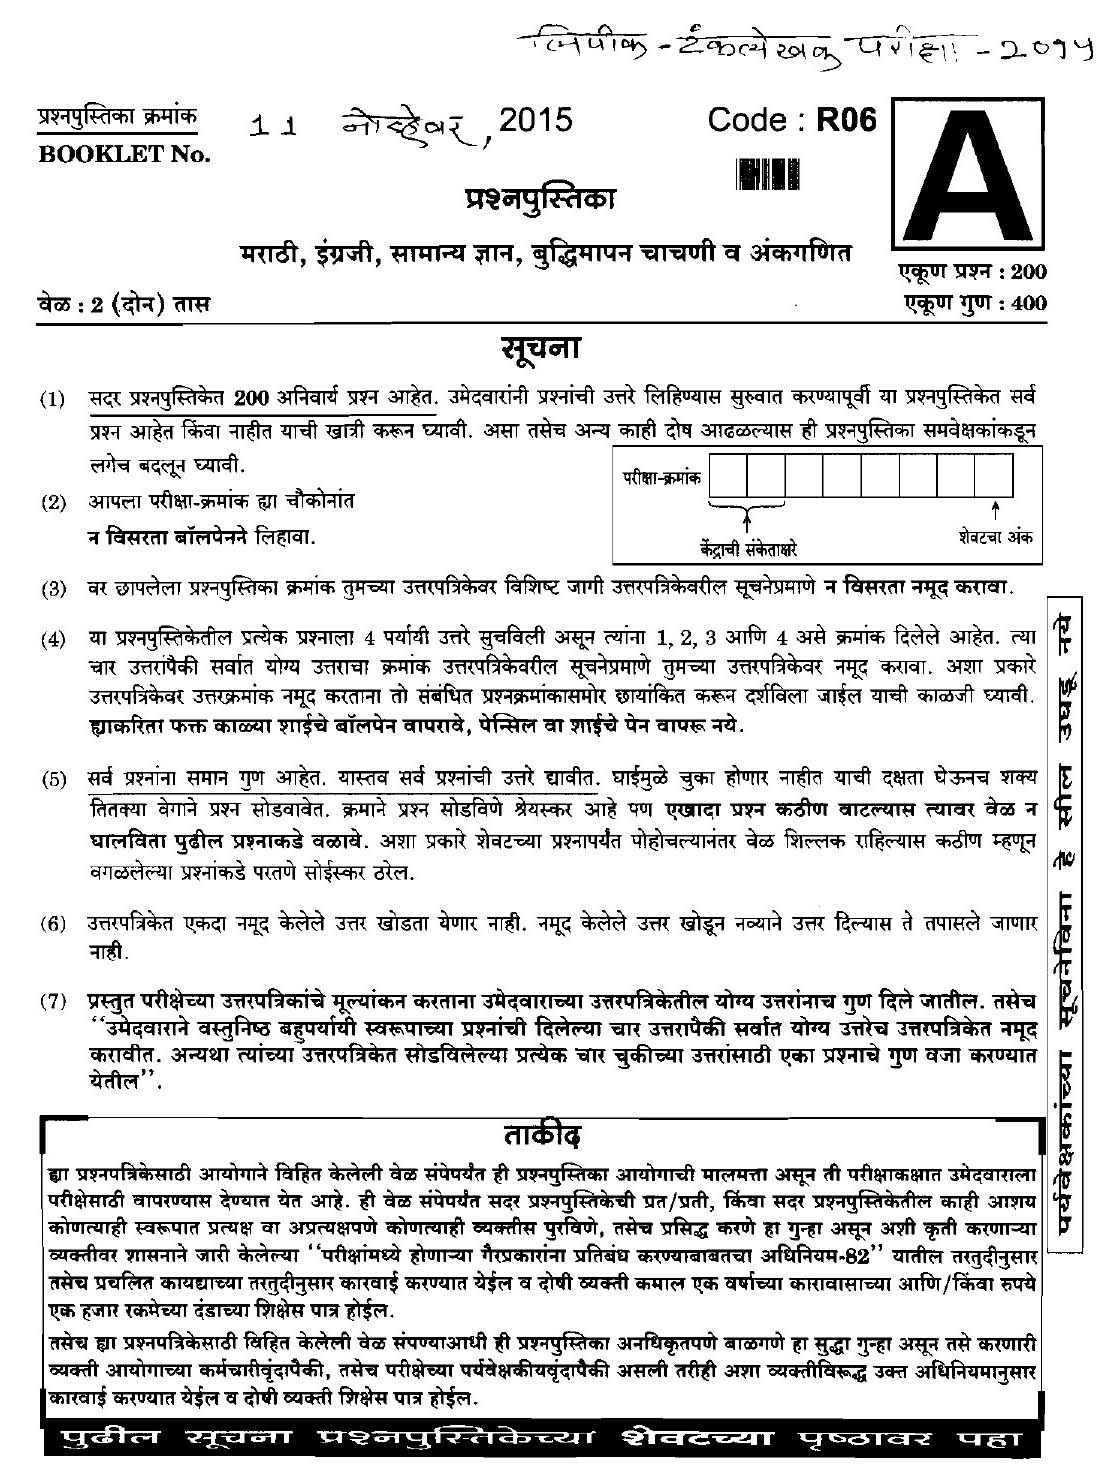 Maharashtra PSC Clerk Typist Exam Question Paper 2015 1